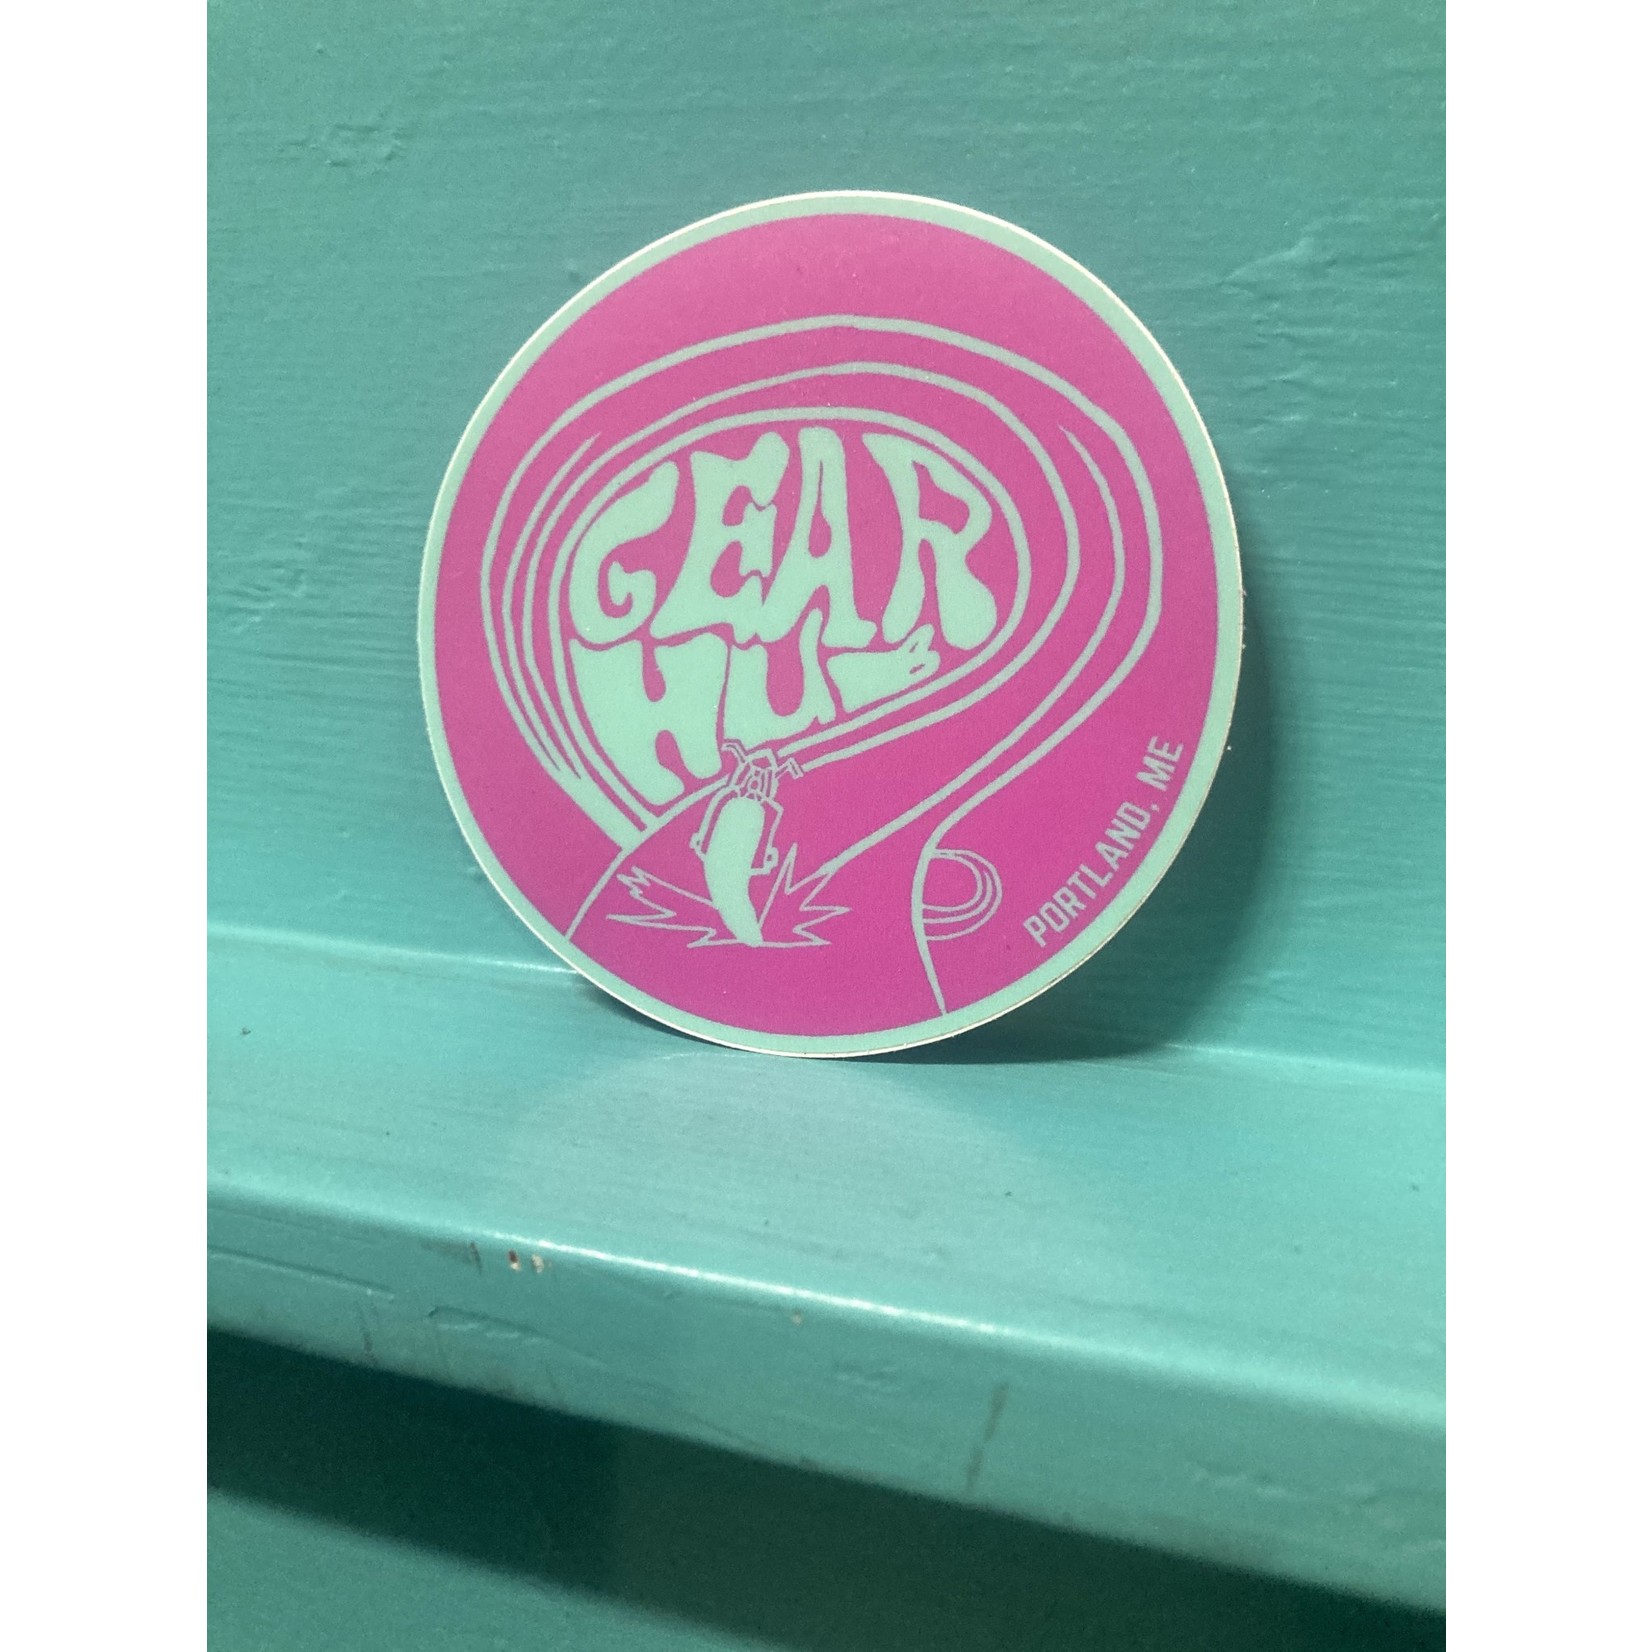 Portland Gear Hub PGH Sticker, Purple/Teal Swirl, 2.5'' Circle